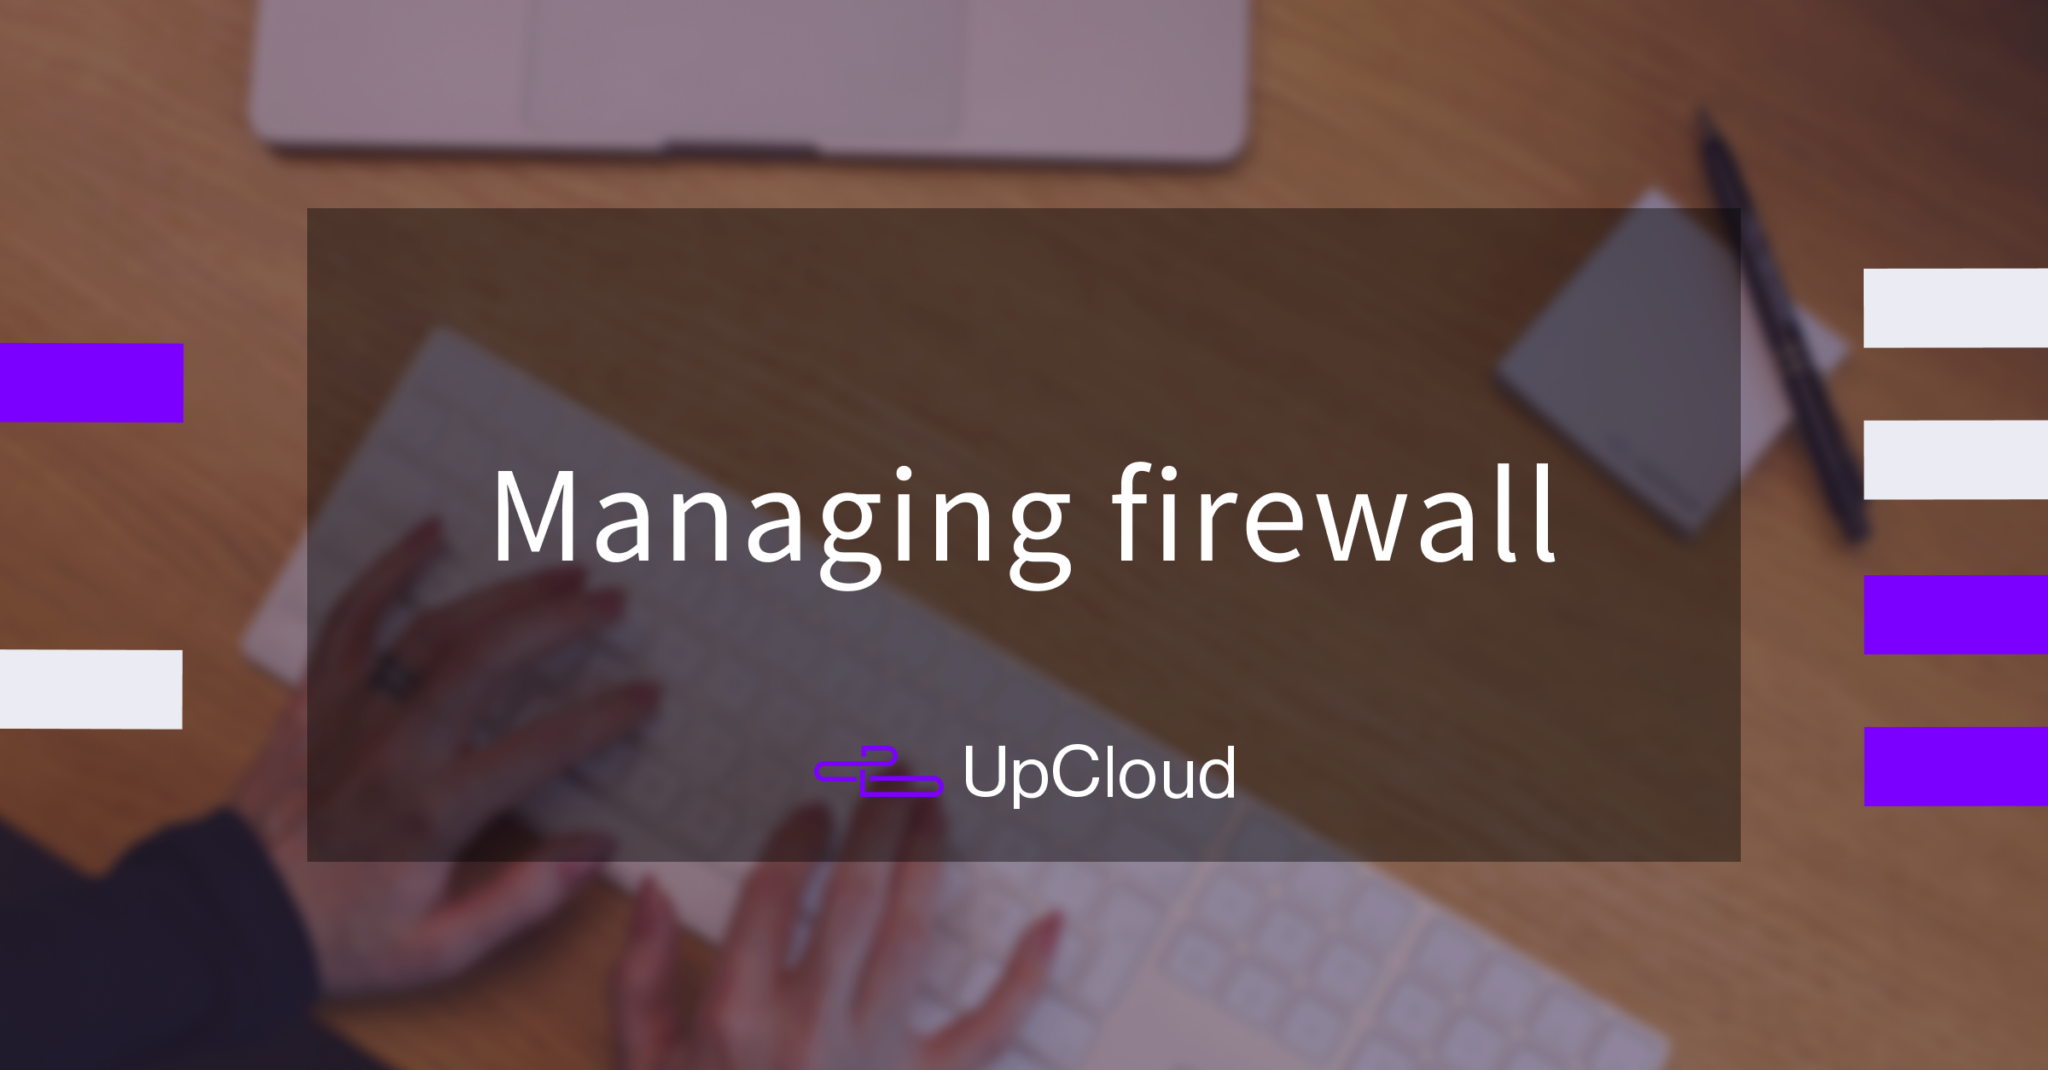 Managing firewall